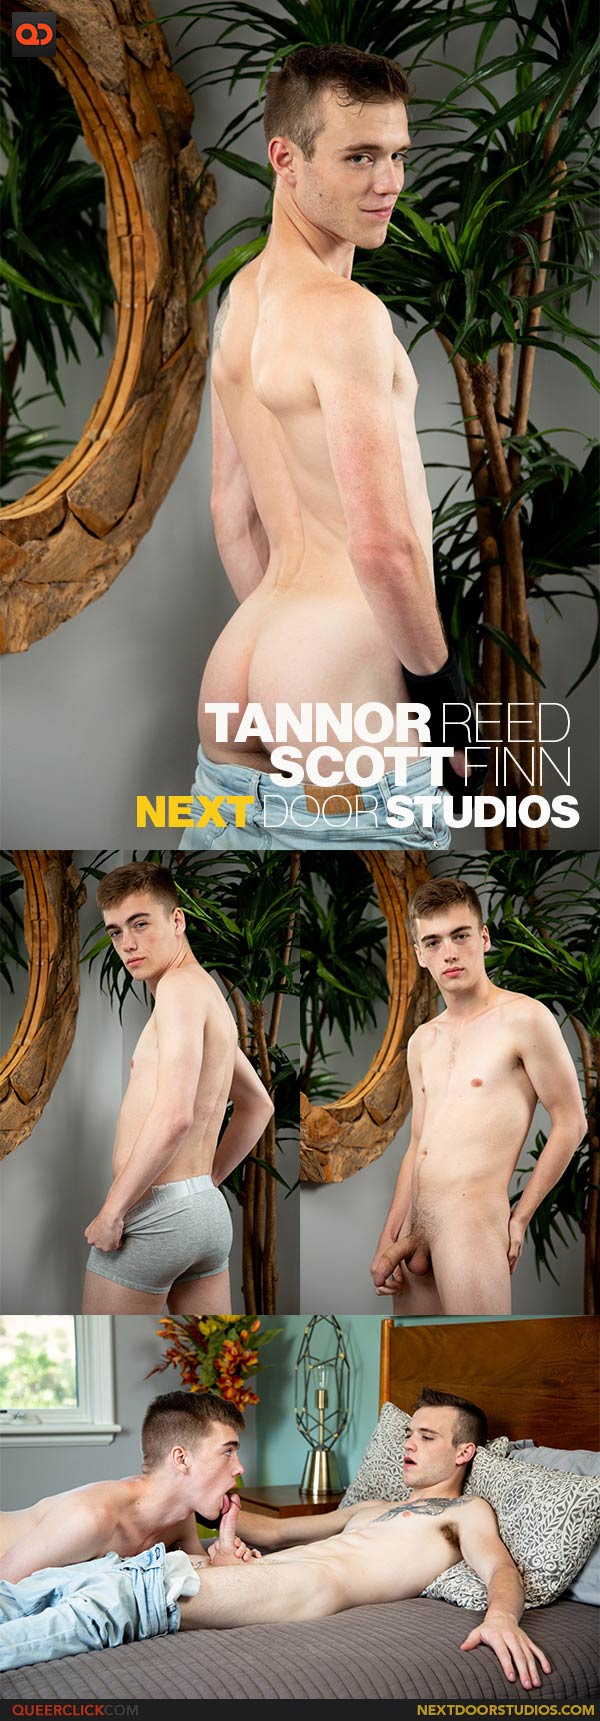 Next Door Studios: Scott Finn and Tannor Reed